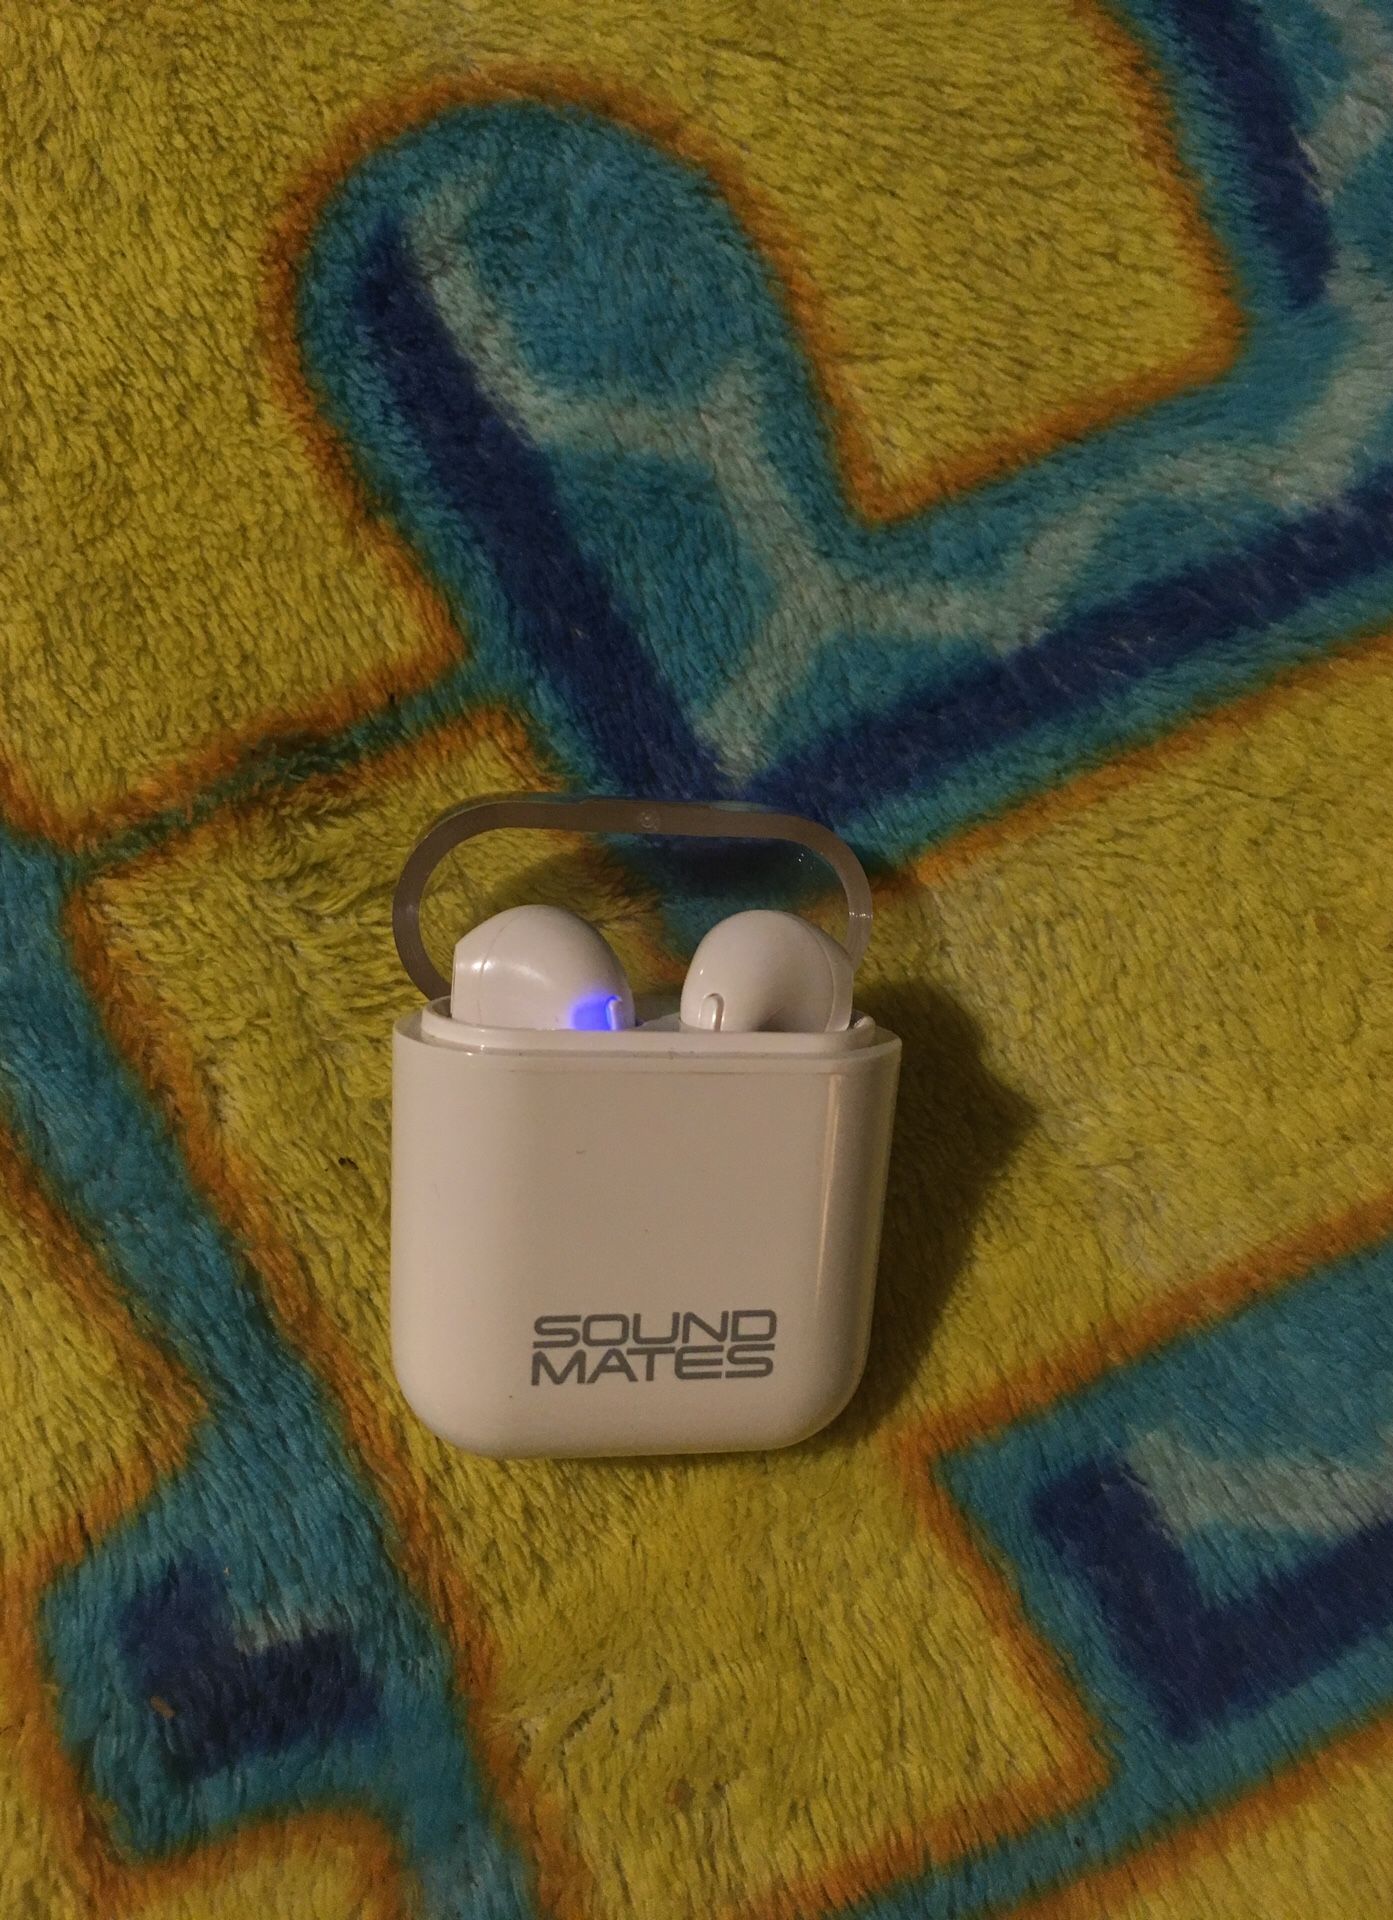 SoundMates bluetooth headphones